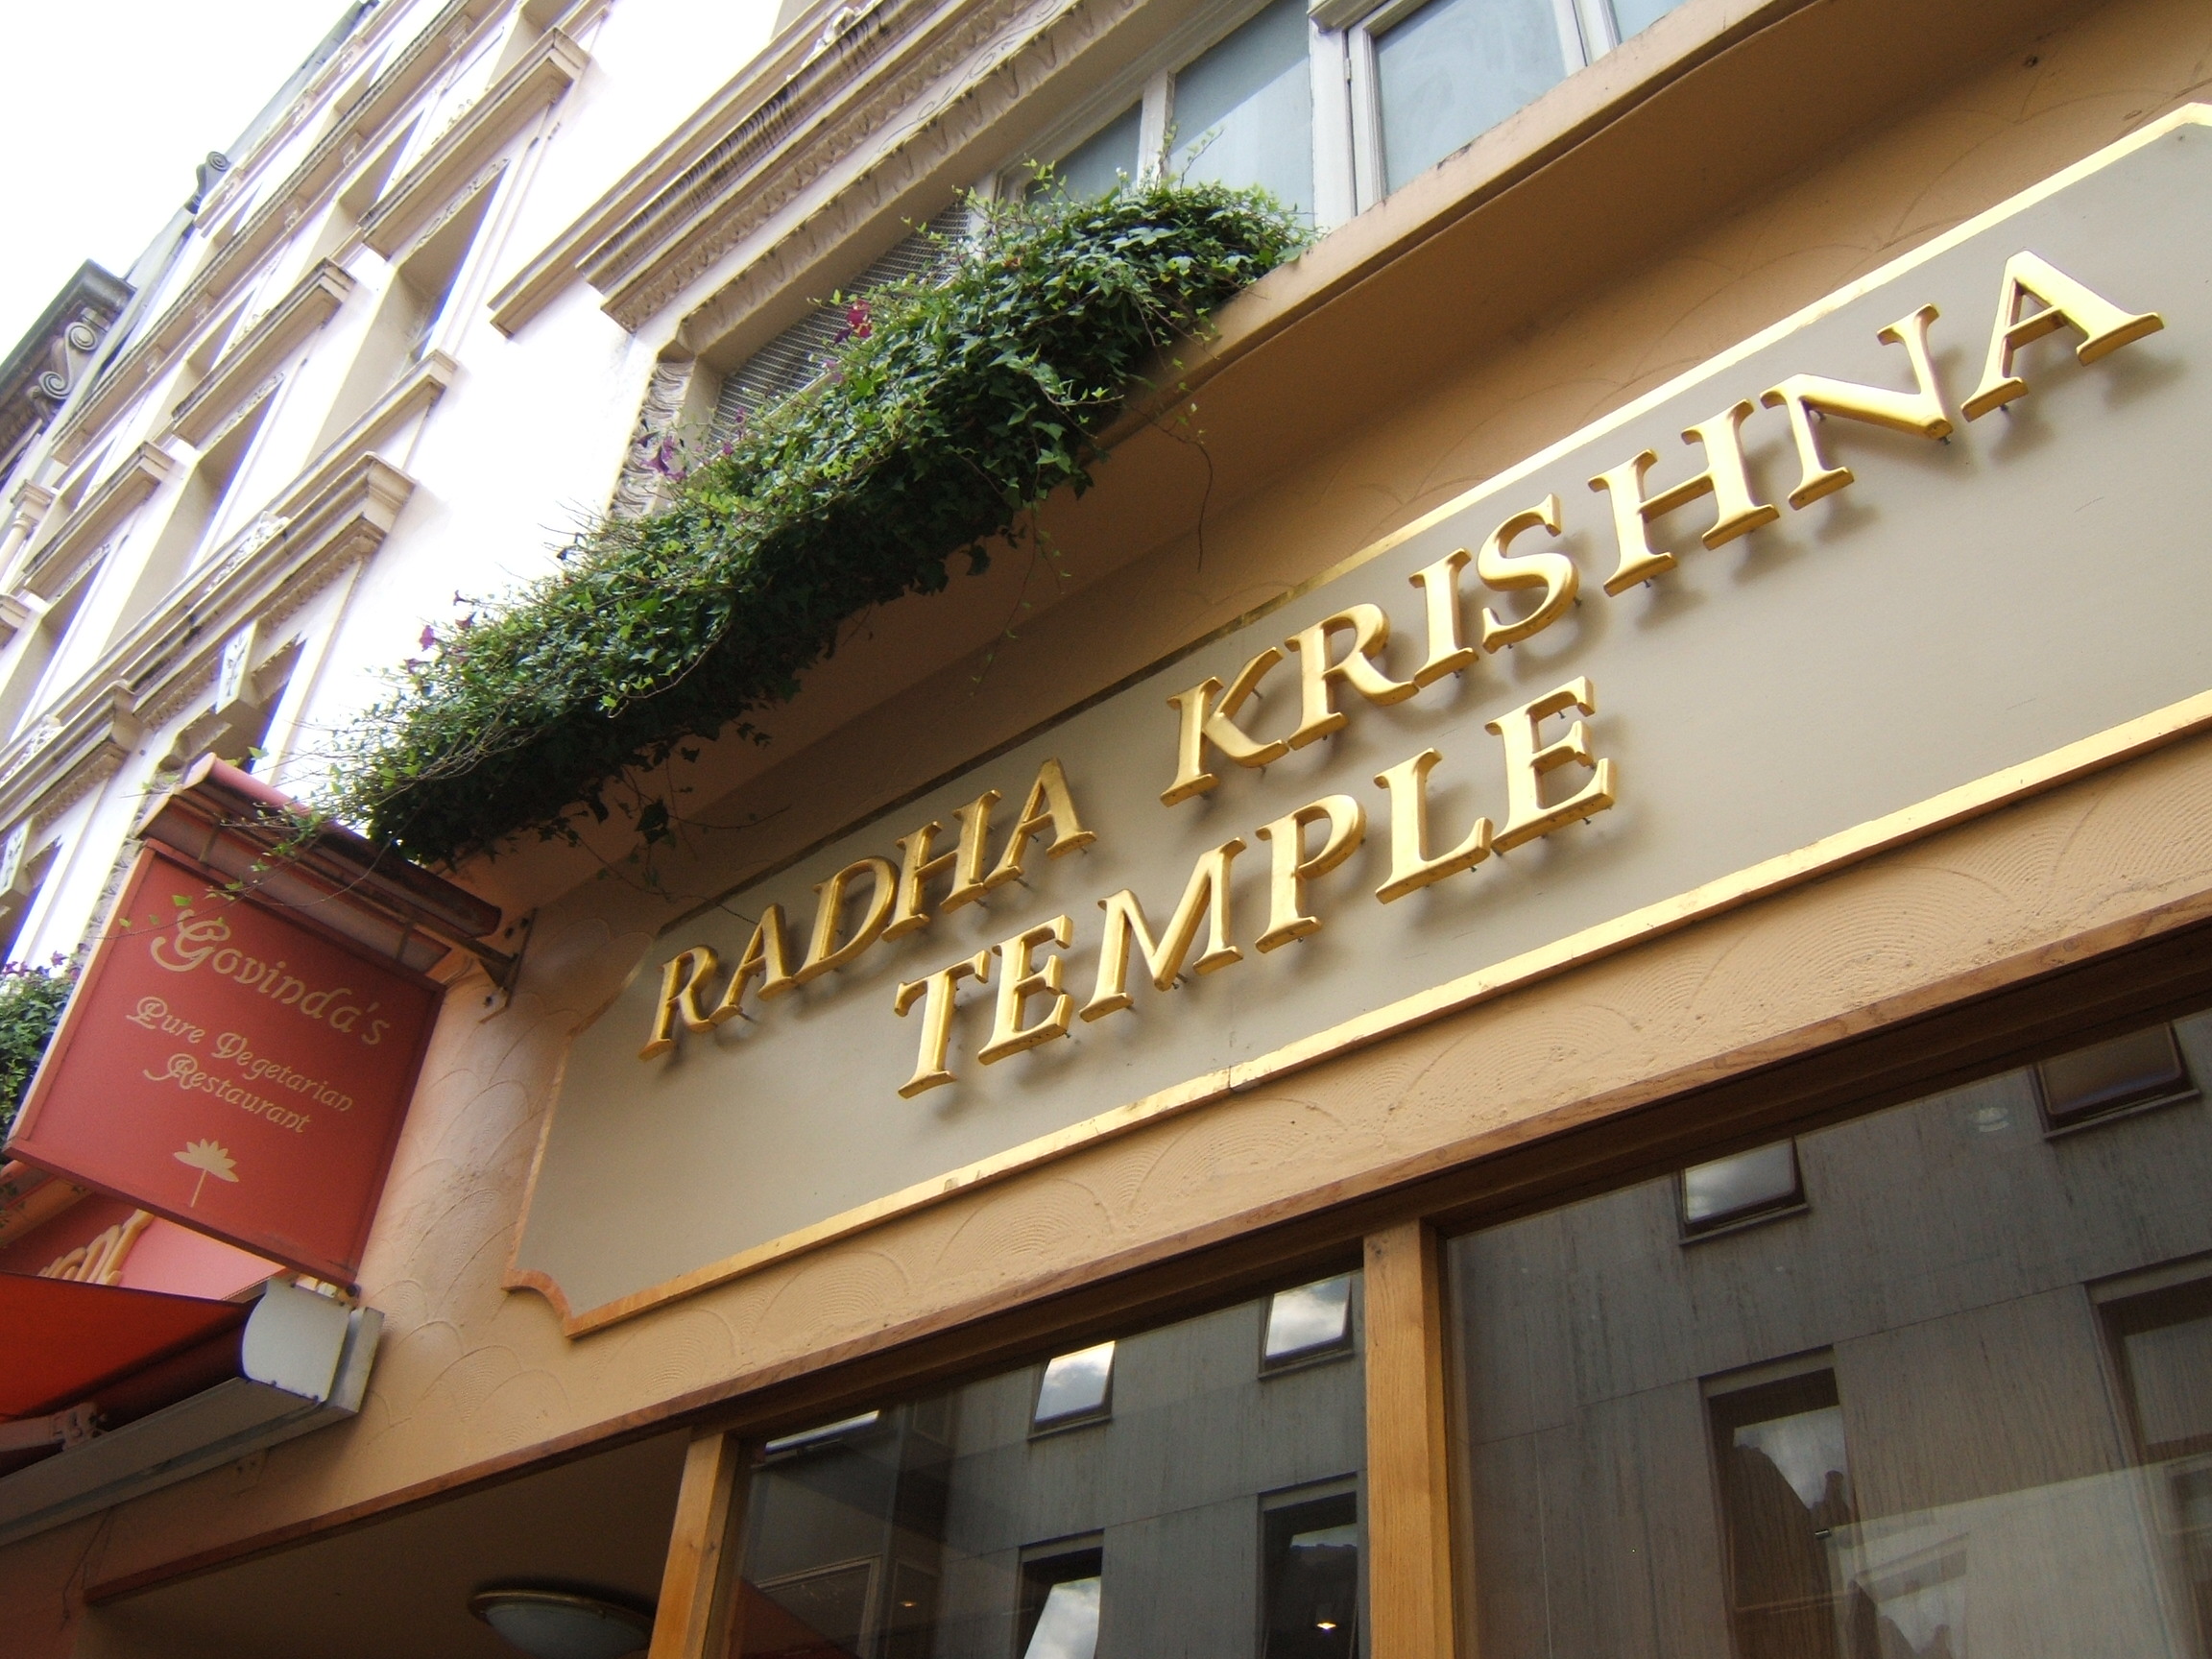 Radha Krishna Temple London - Info, Timings, Photos, History